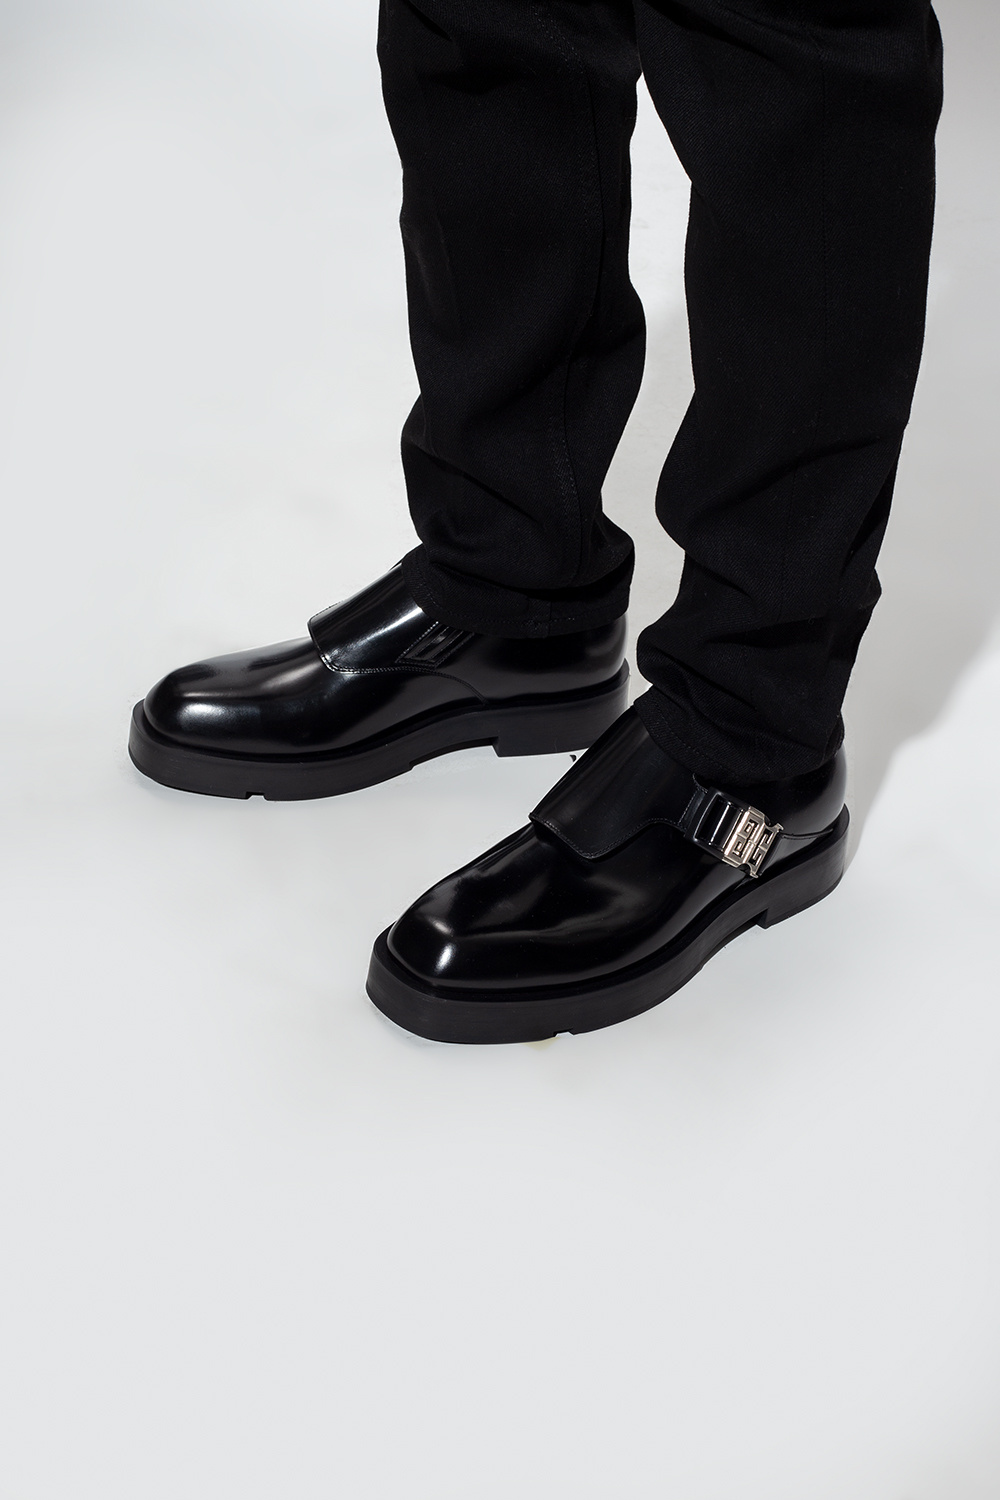 Givenchy Adidas Y-3 Qasa Mens Snowflakes Black Nylon Fashion Beach Sandals Hot Sale